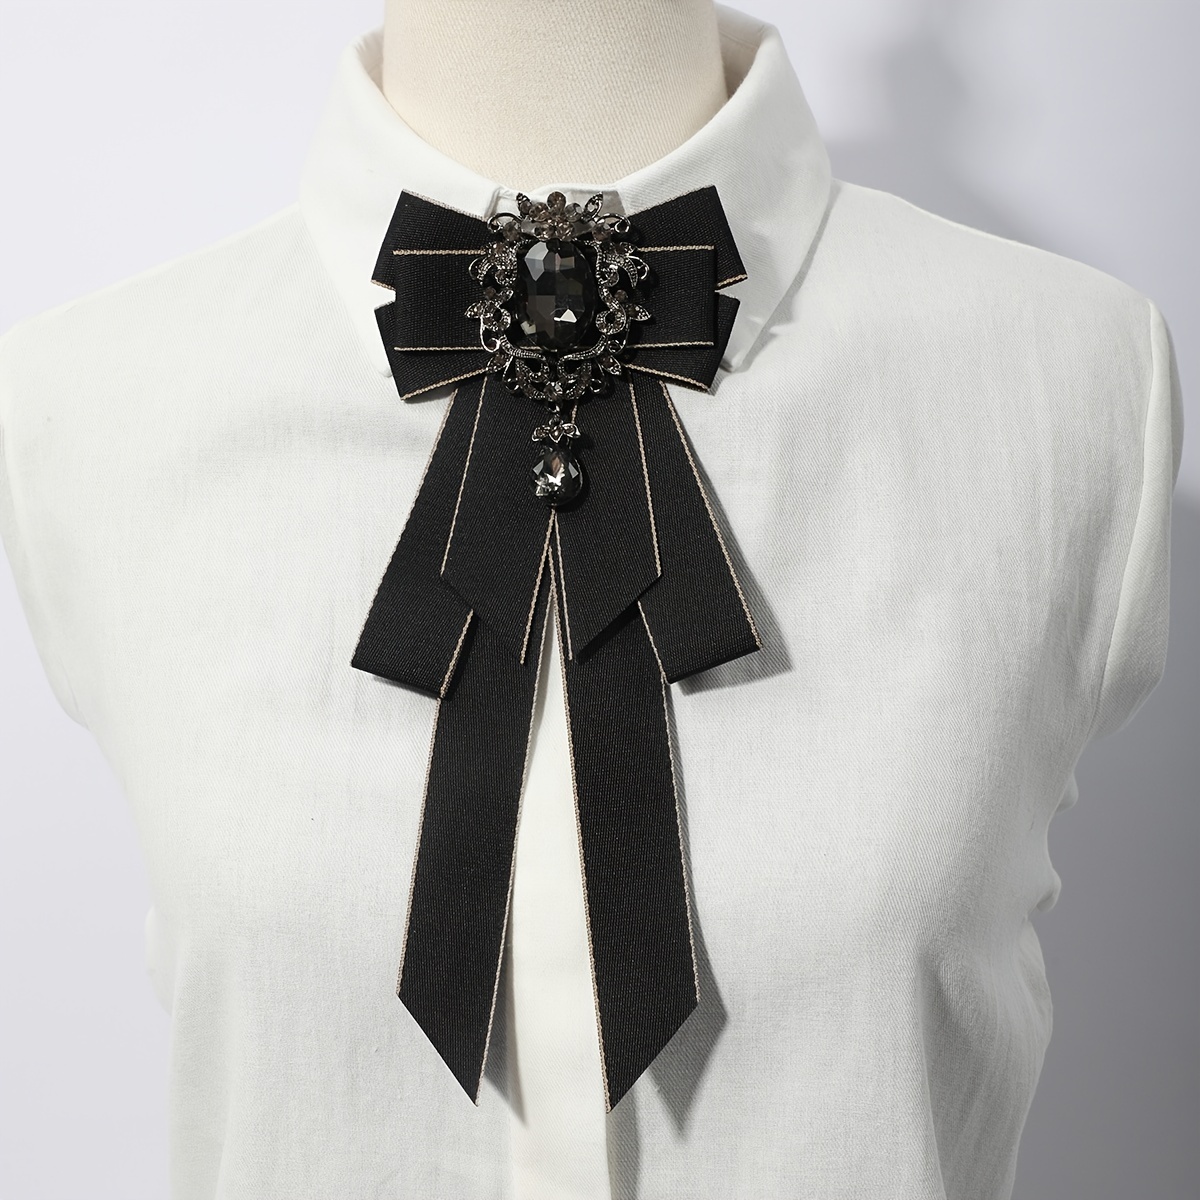 Women Suspender Belt With Bowtie For Shirt Dress Ladies Uniform Accesories